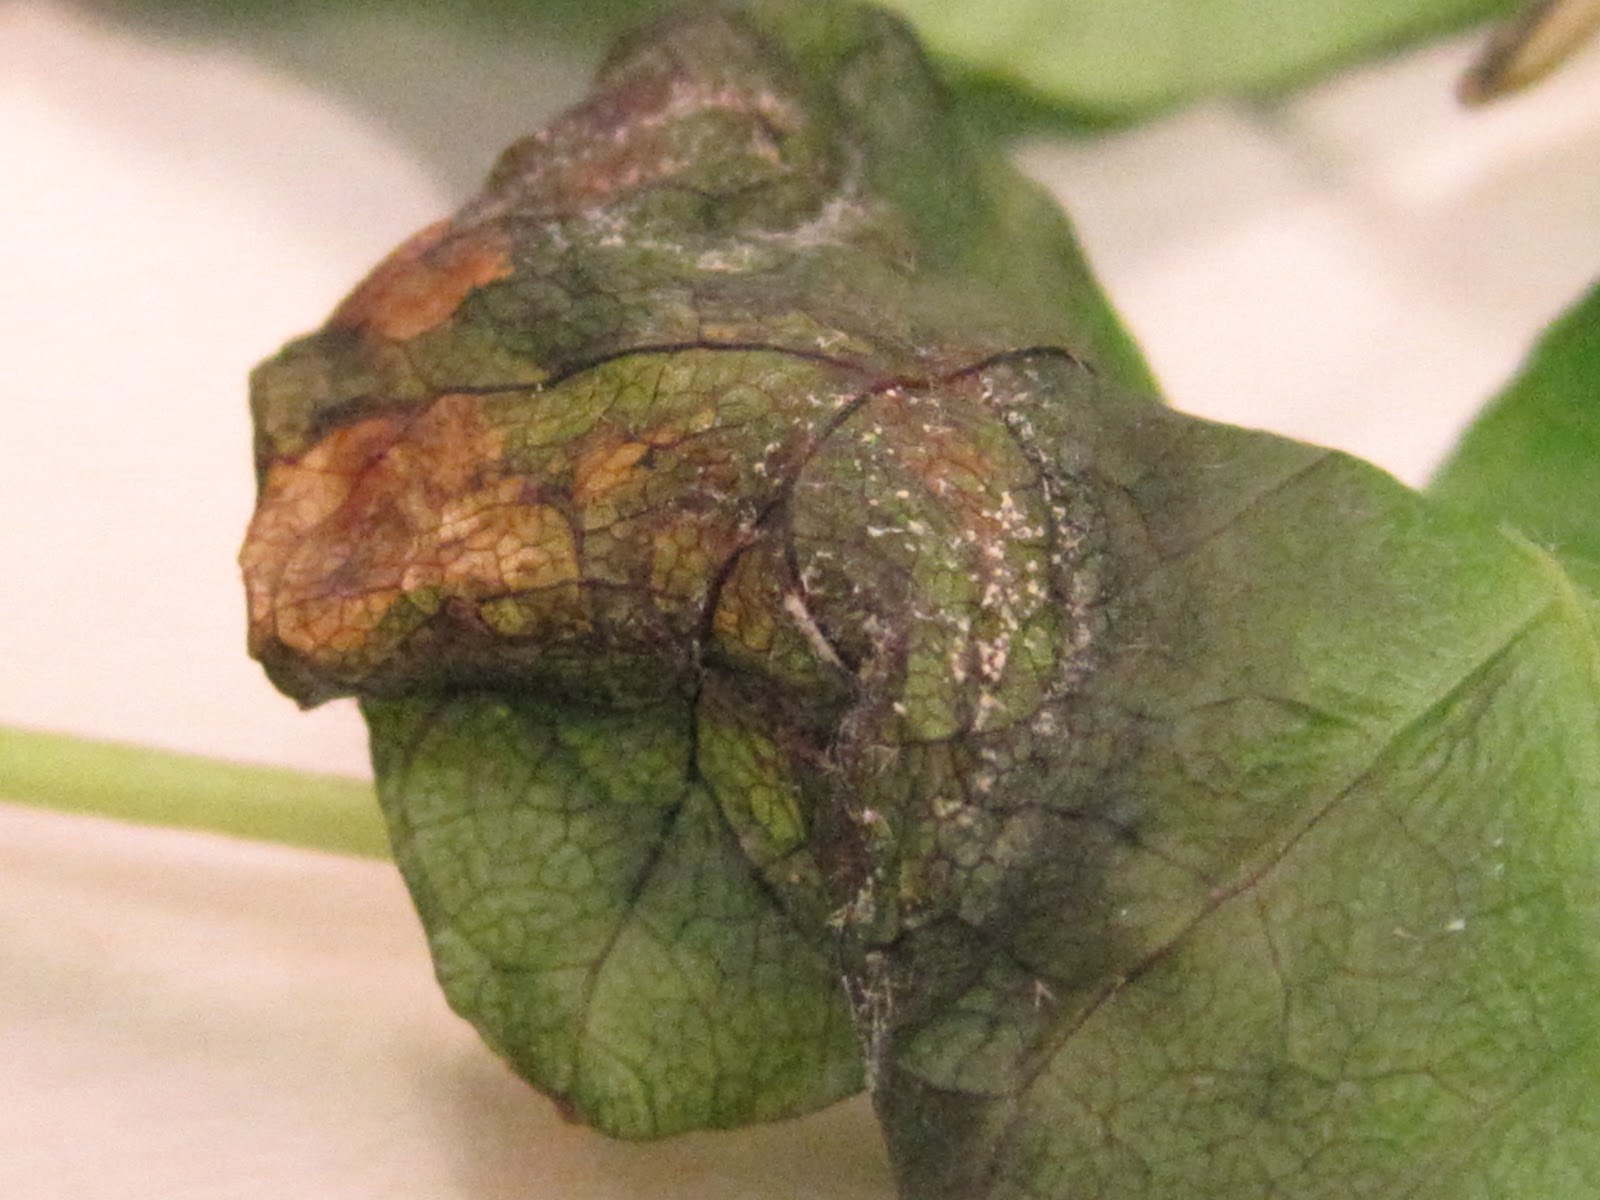 NCSU PDIC: Bacterial Leaf Spot on English Ivy